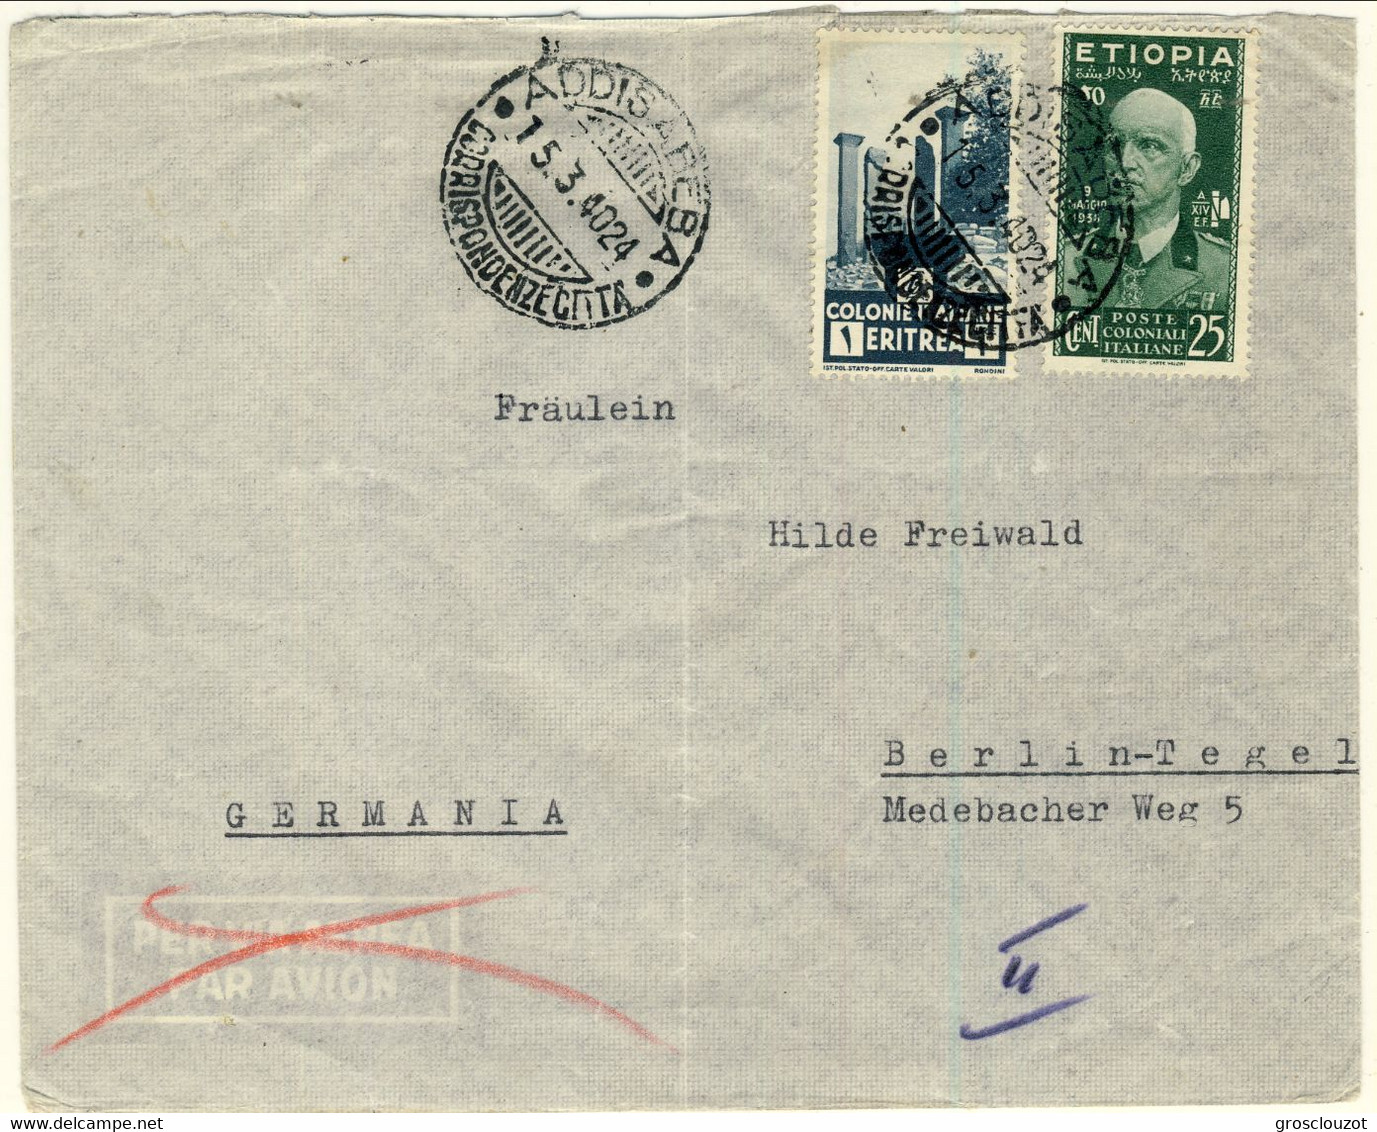 Etiopia 1940 Lettera Privata Addis Abeba-Germania Affrancata Con Il C. 25 Verde N. 3 E Eritrea L. 1 N. 209 - Ethiopië